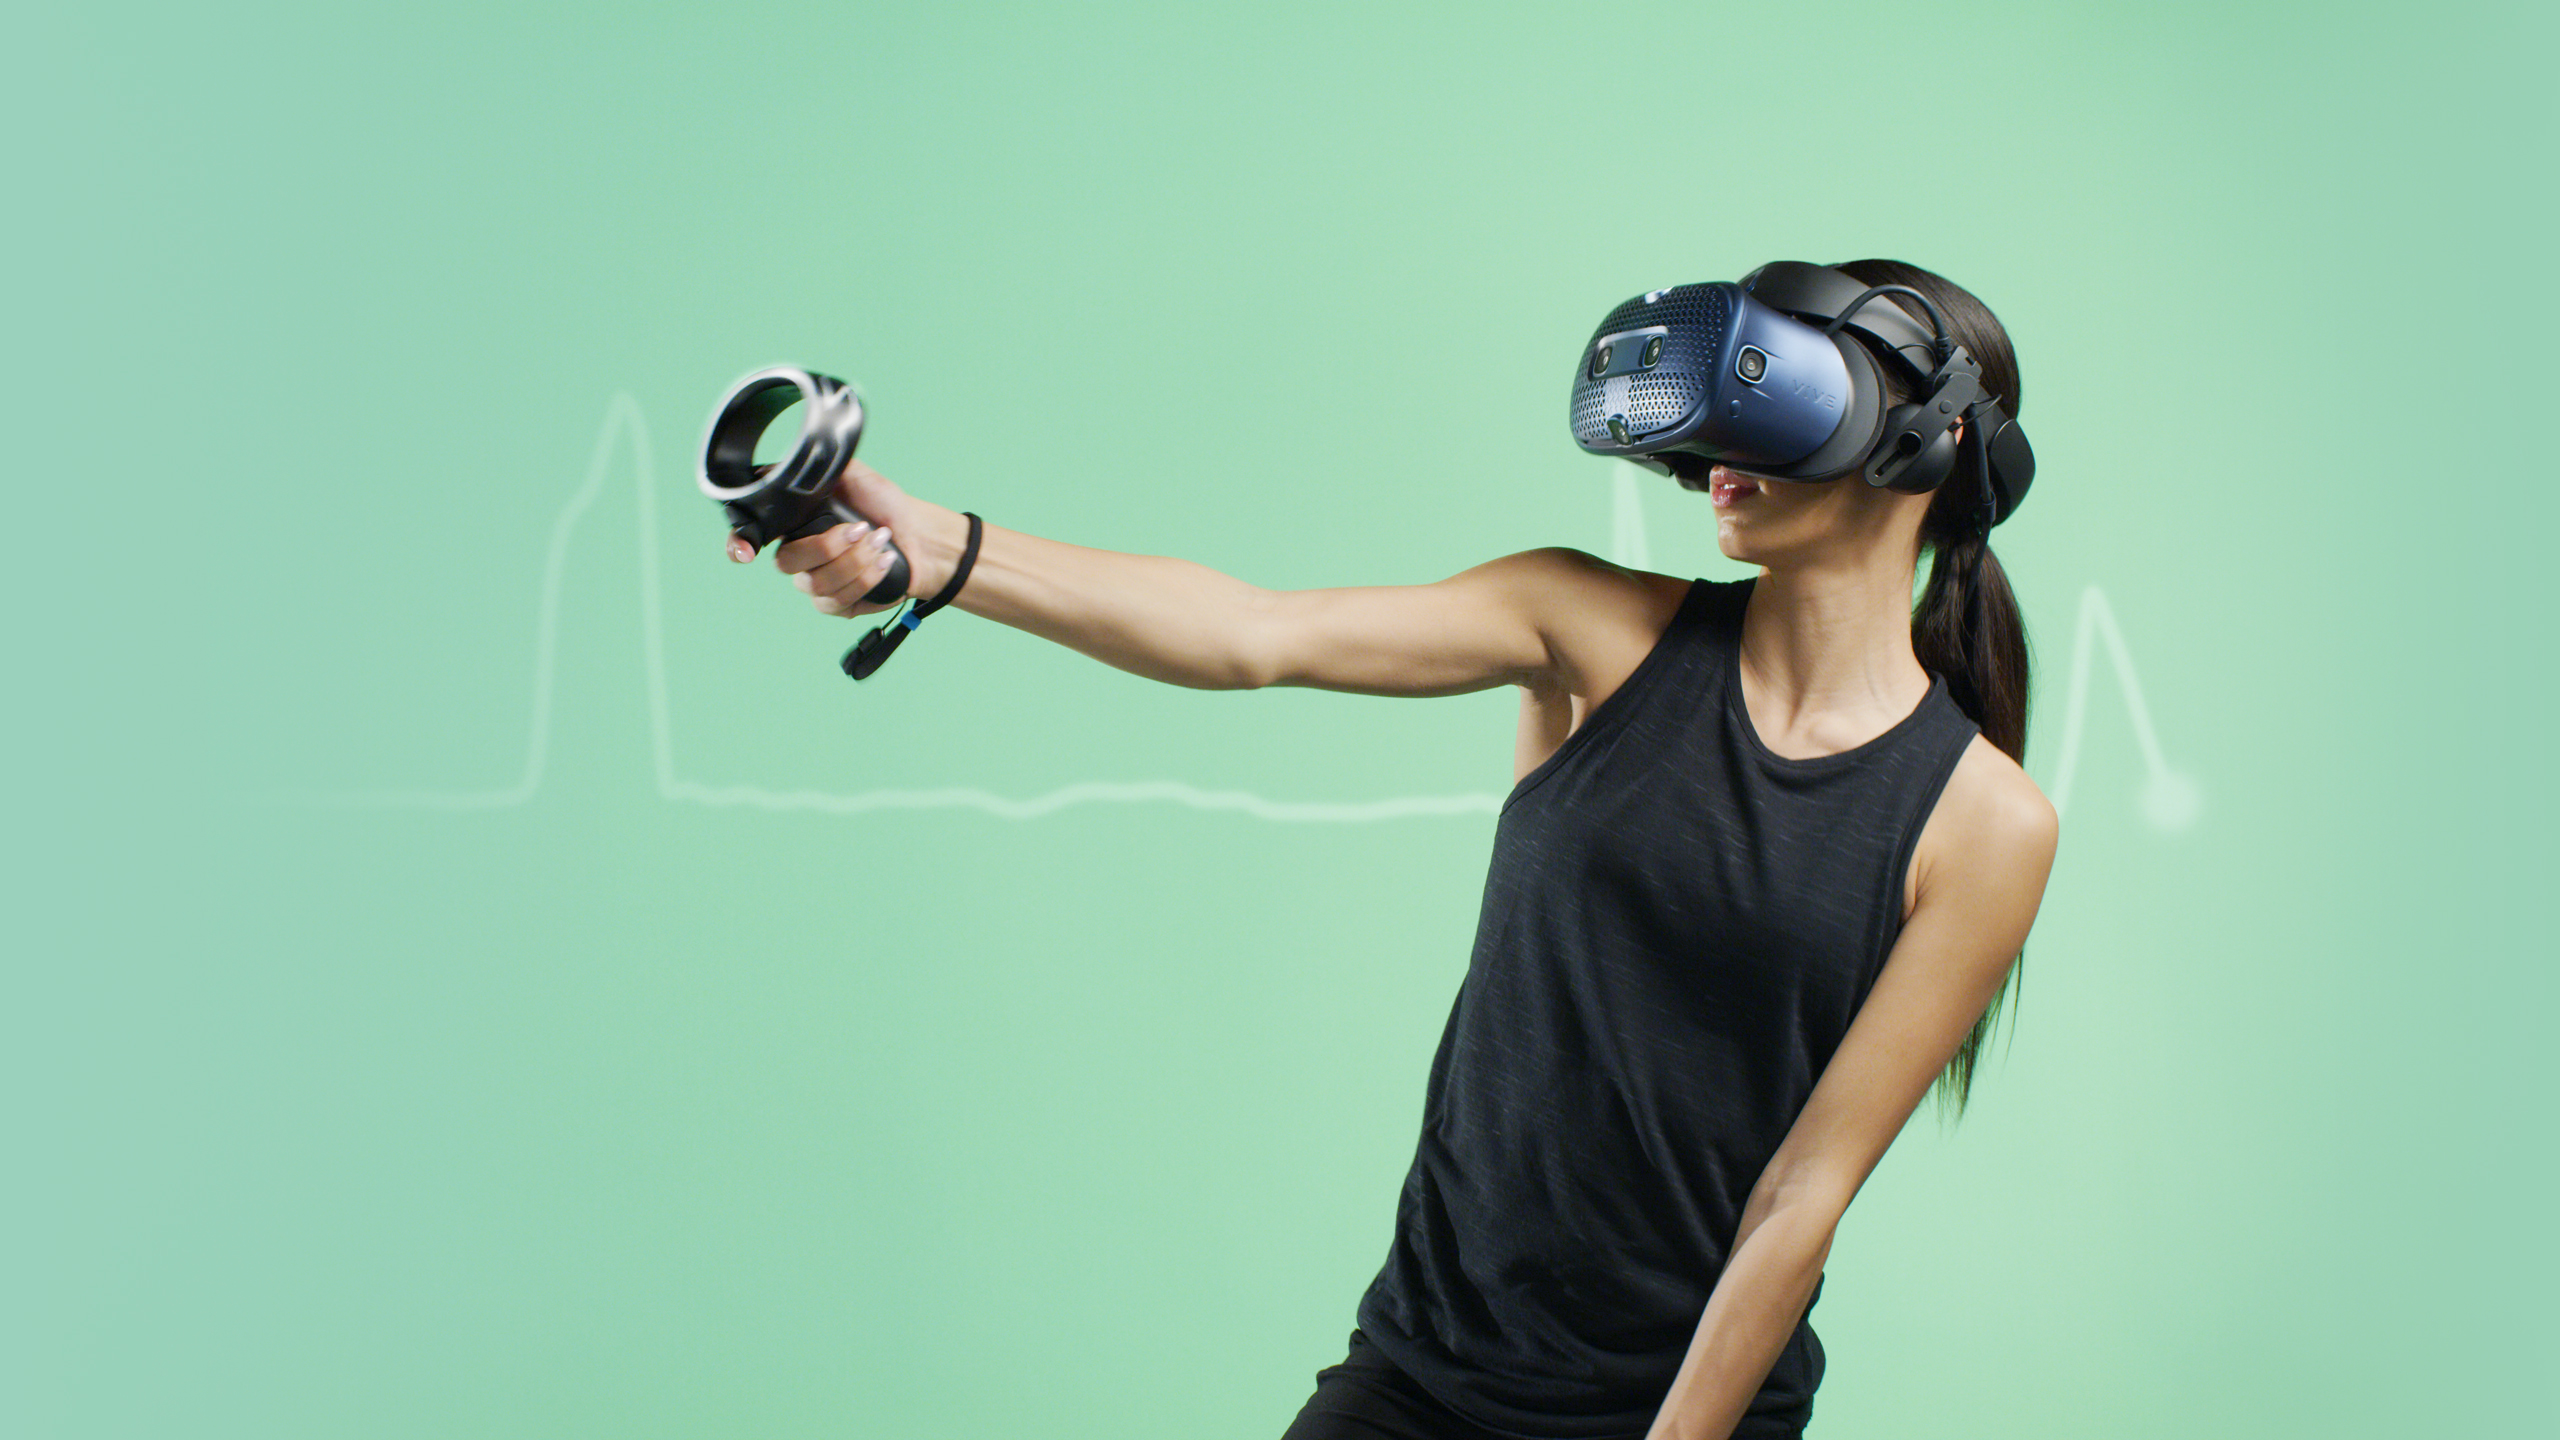 Vr ярославль. HTC Vive. Очки виртуальной реальности. Виртуальная реальность девушка. VR виртуальная реальность.